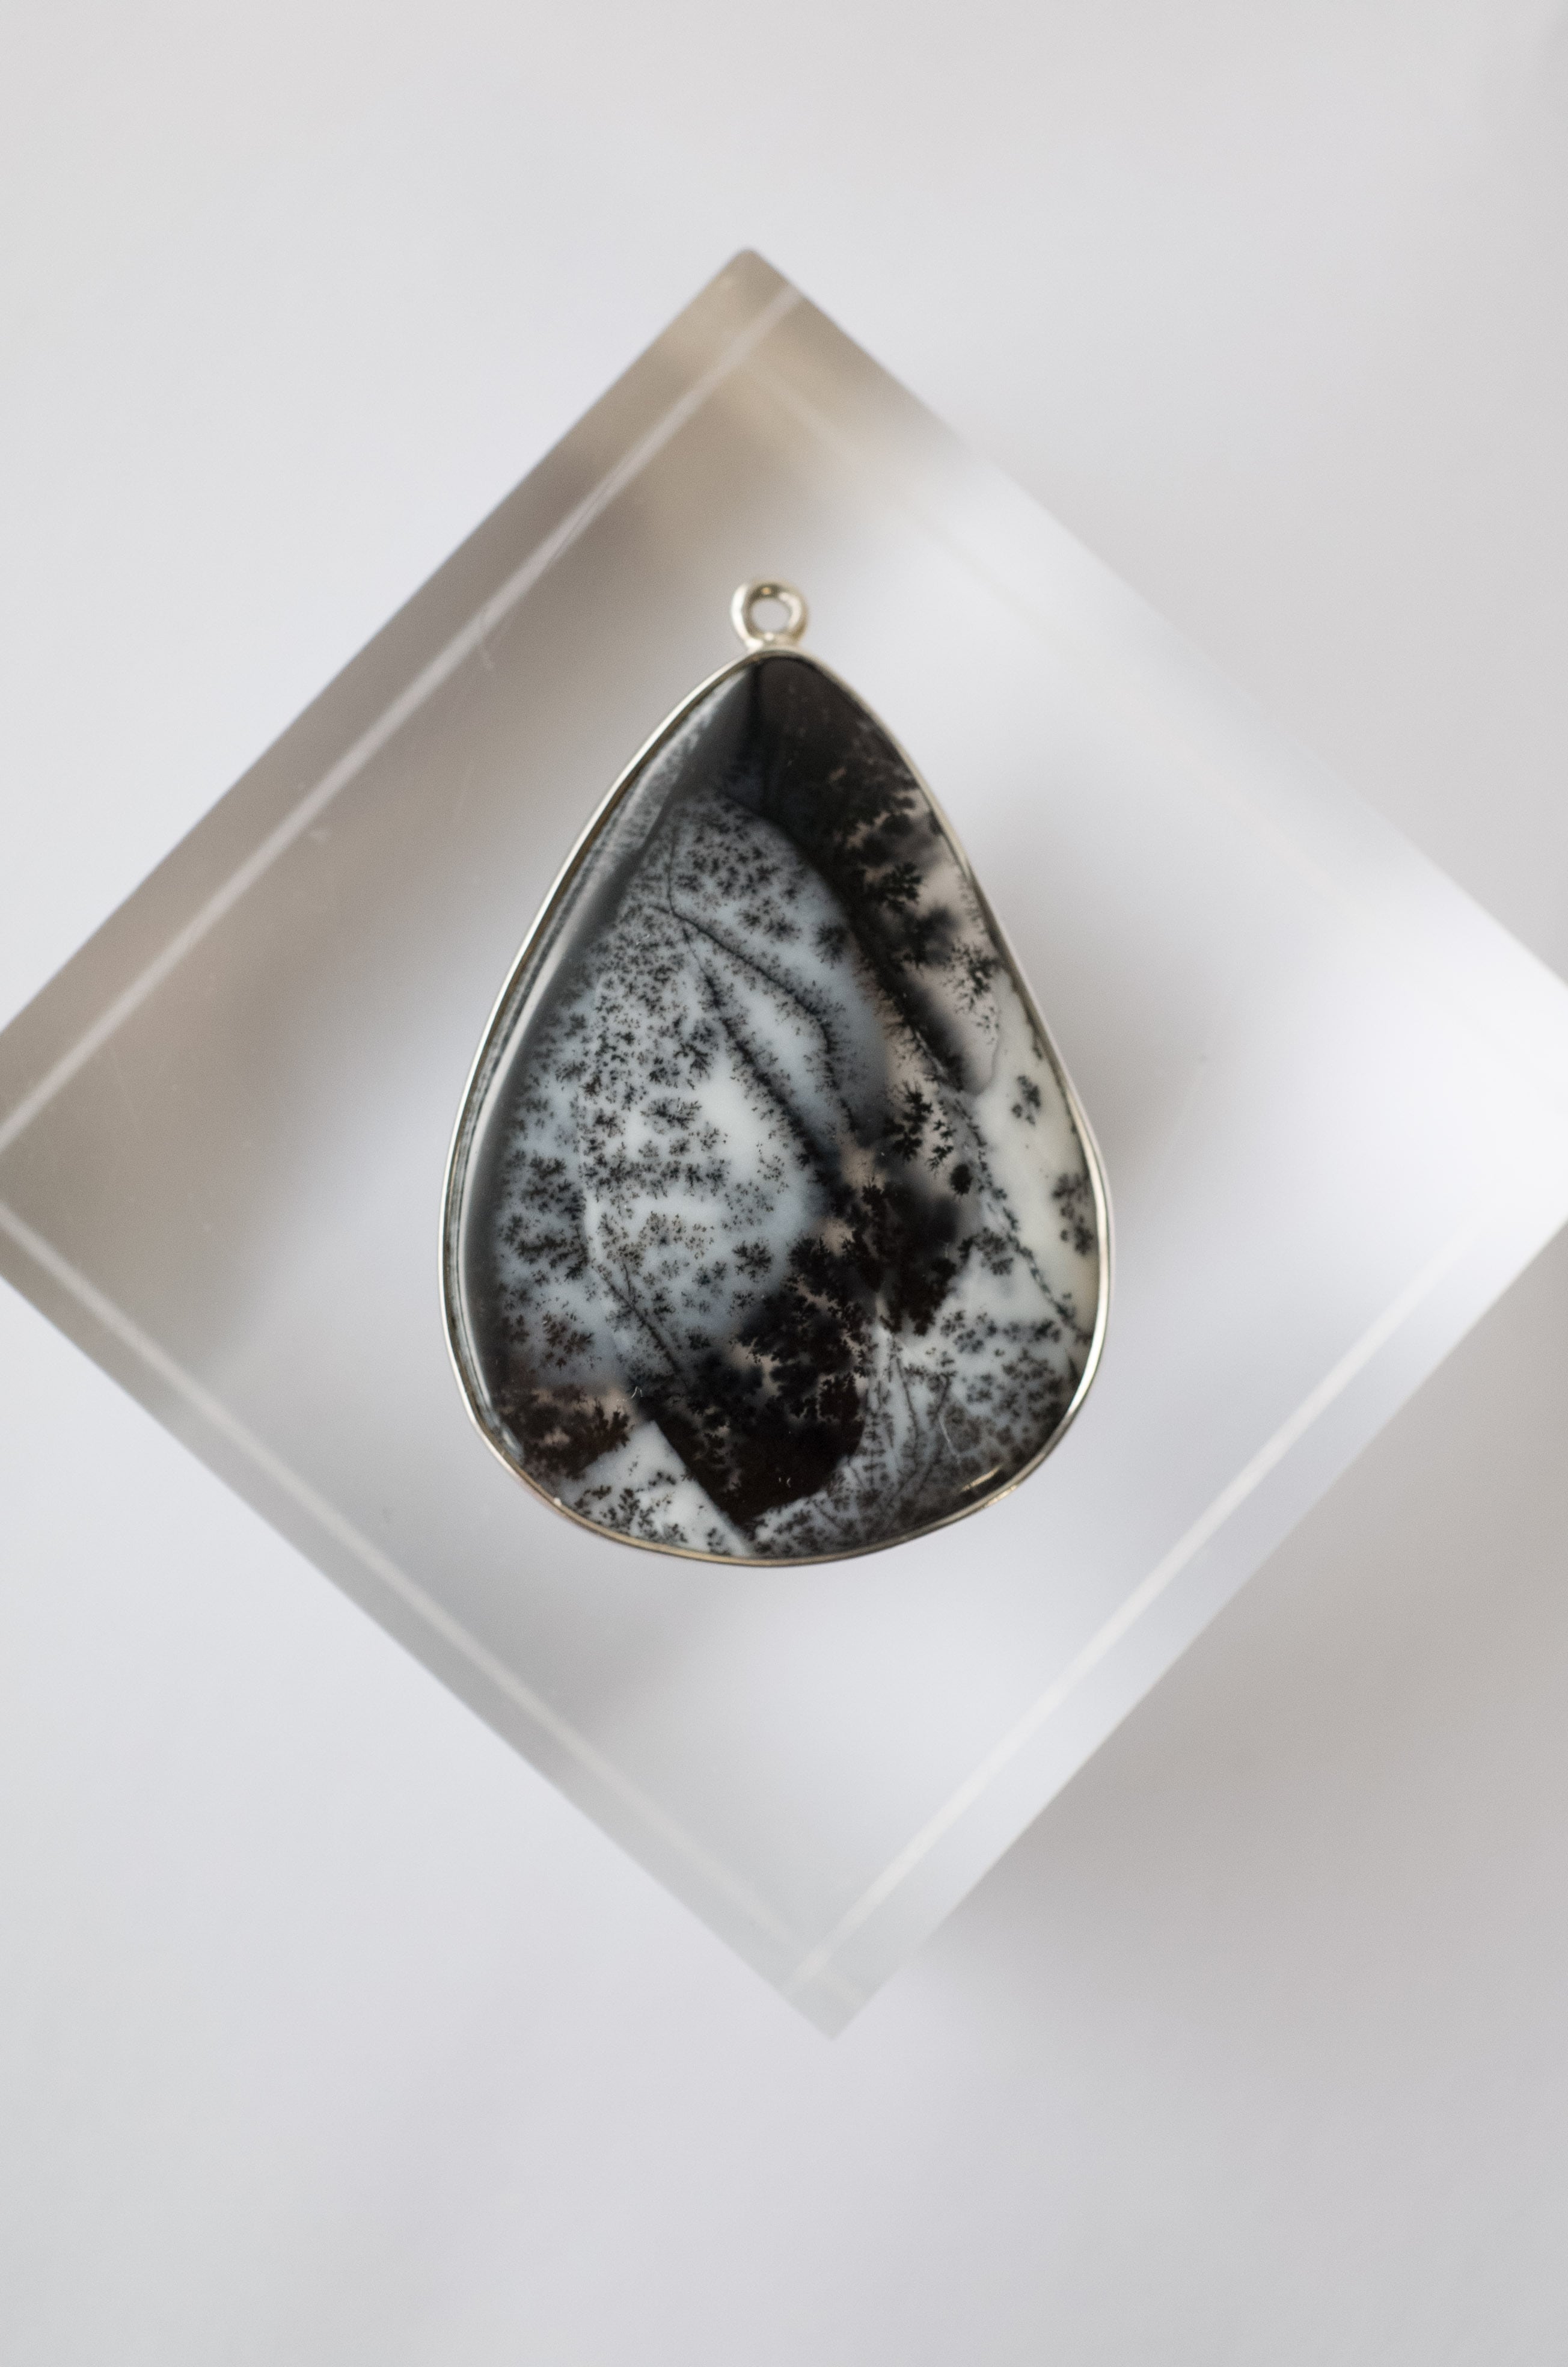 【50cmチェーン付き】Dendritic Opal Pendant  Silver925 - 009